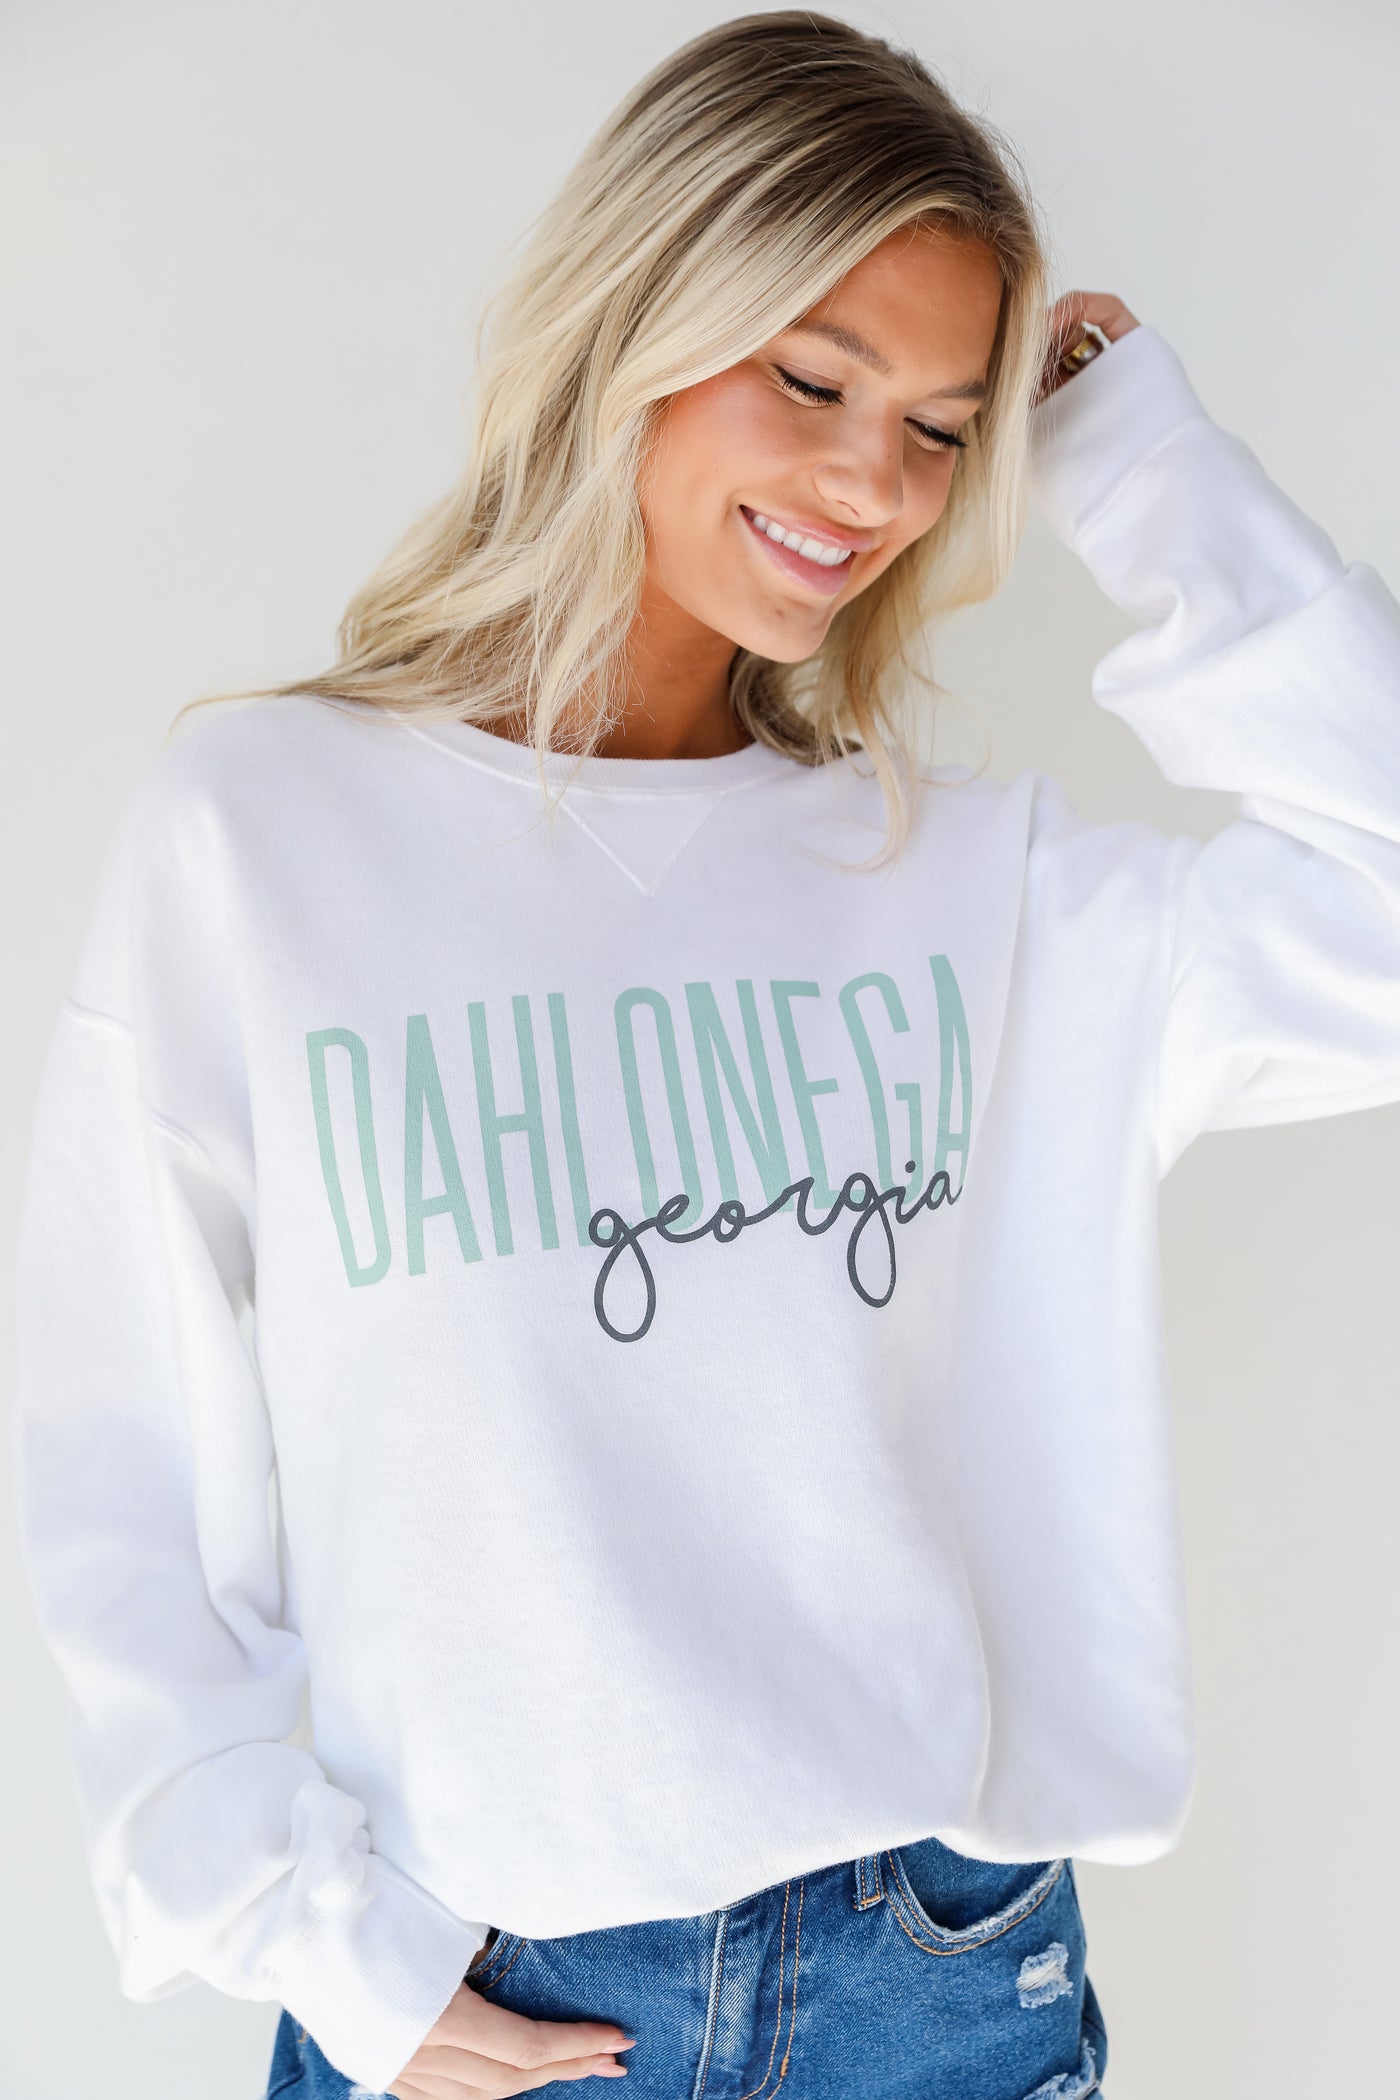 Dahlonega Georgia Script Pullover. Graphic Sweatshirt. Oversized Comfy Sweatshirt.